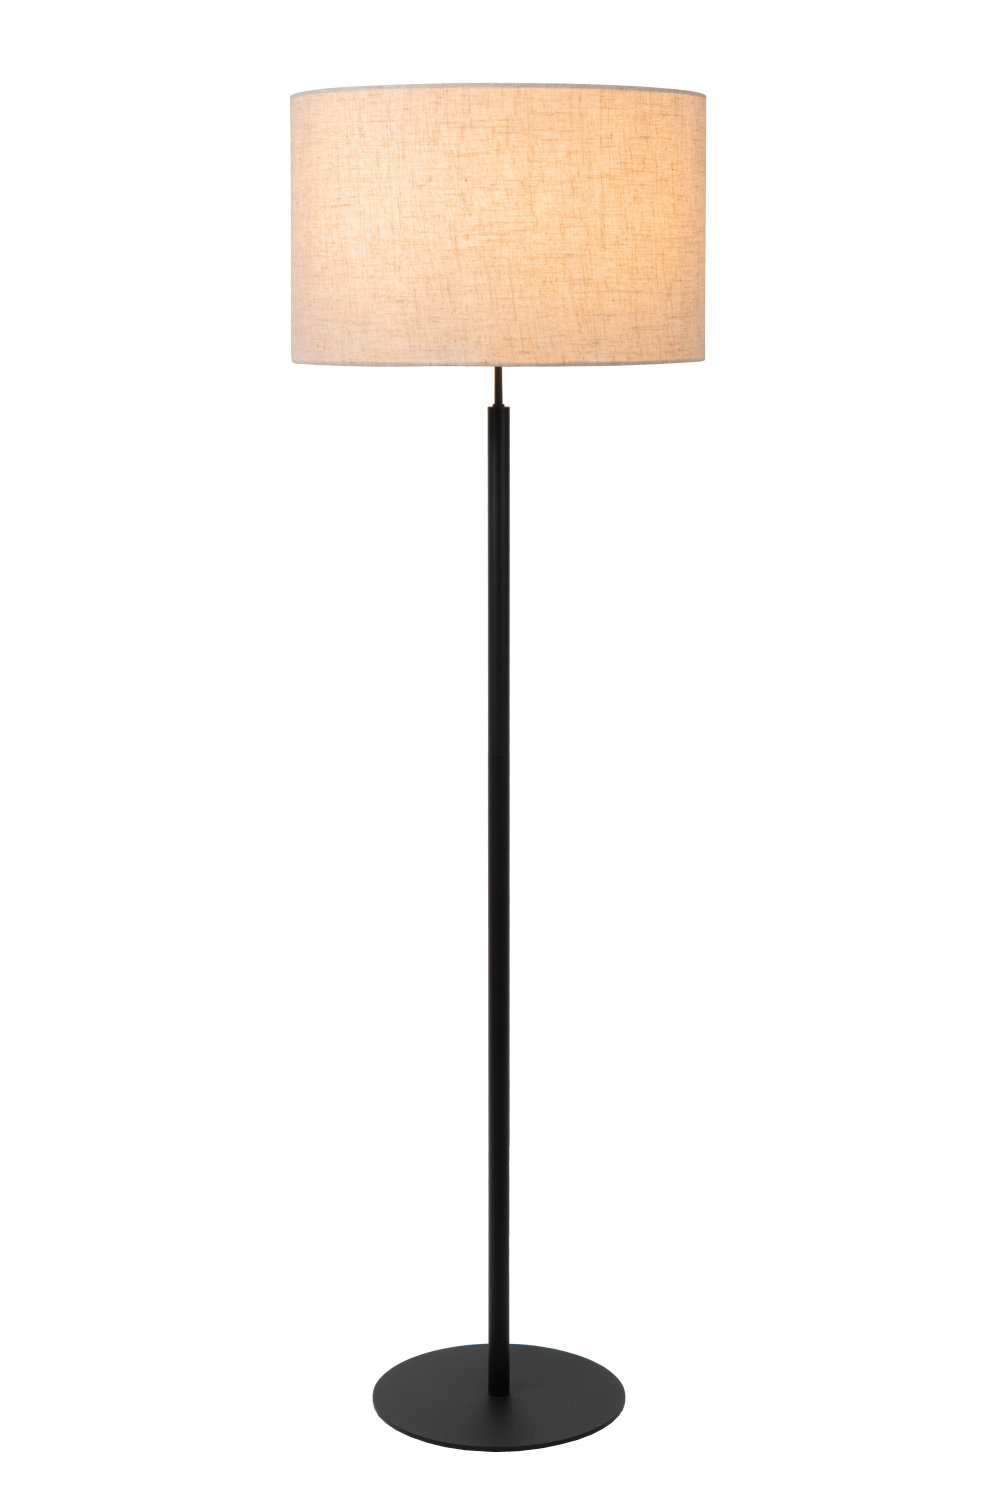 MAYA - Vloerlamp - Ø 45 cm - 1xE27 - Beige